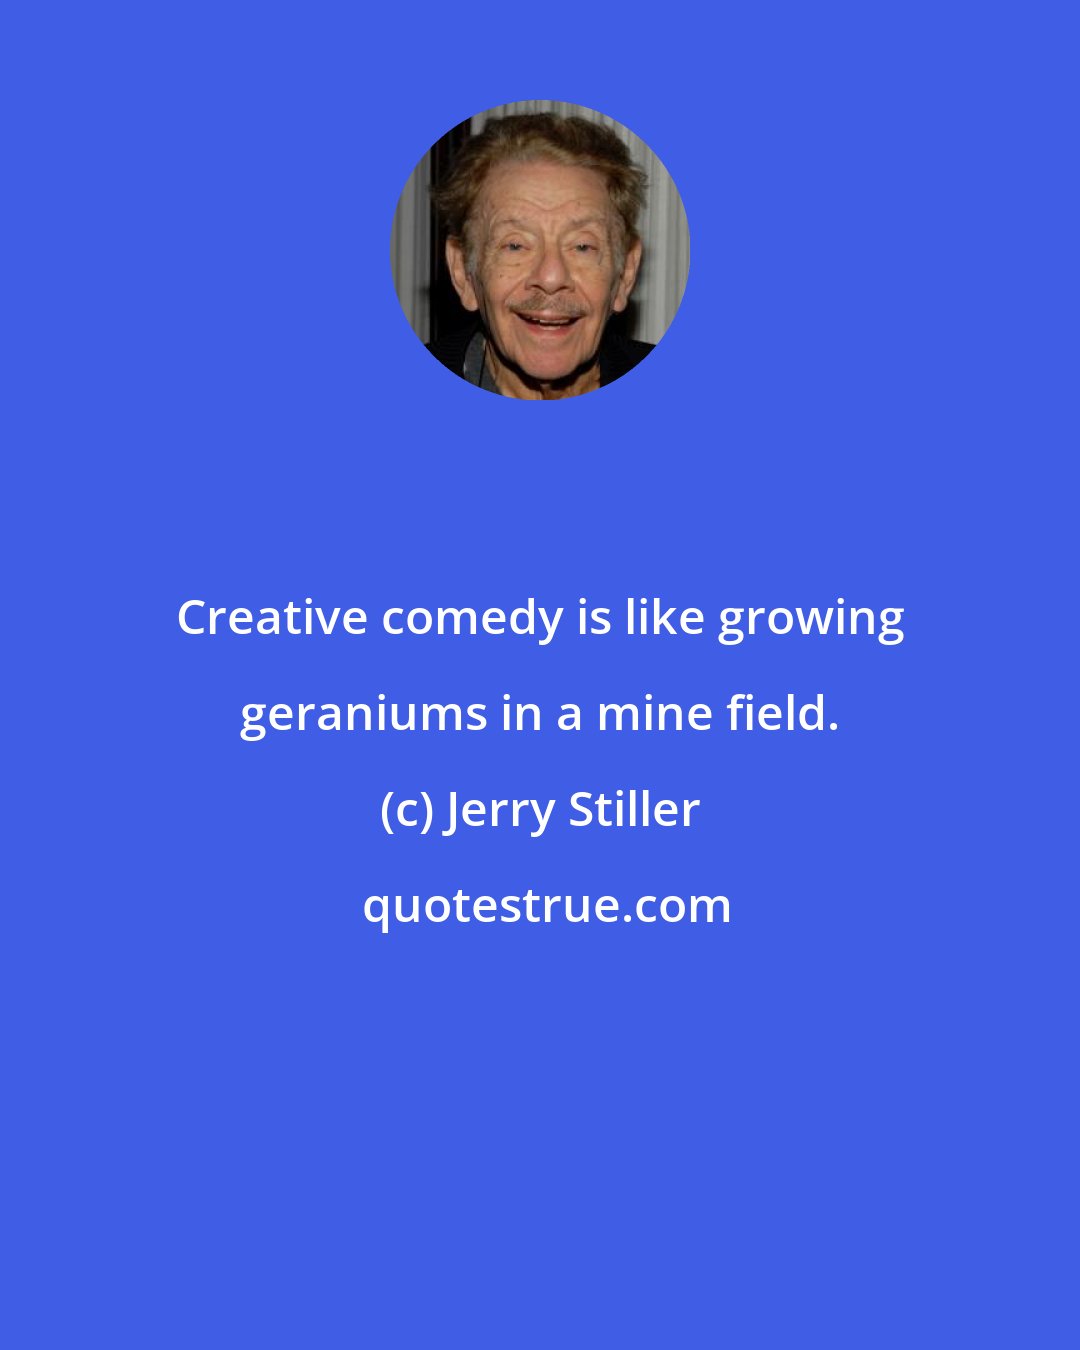 Jerry Stiller: Creative comedy is like growing geraniums in a mine field.